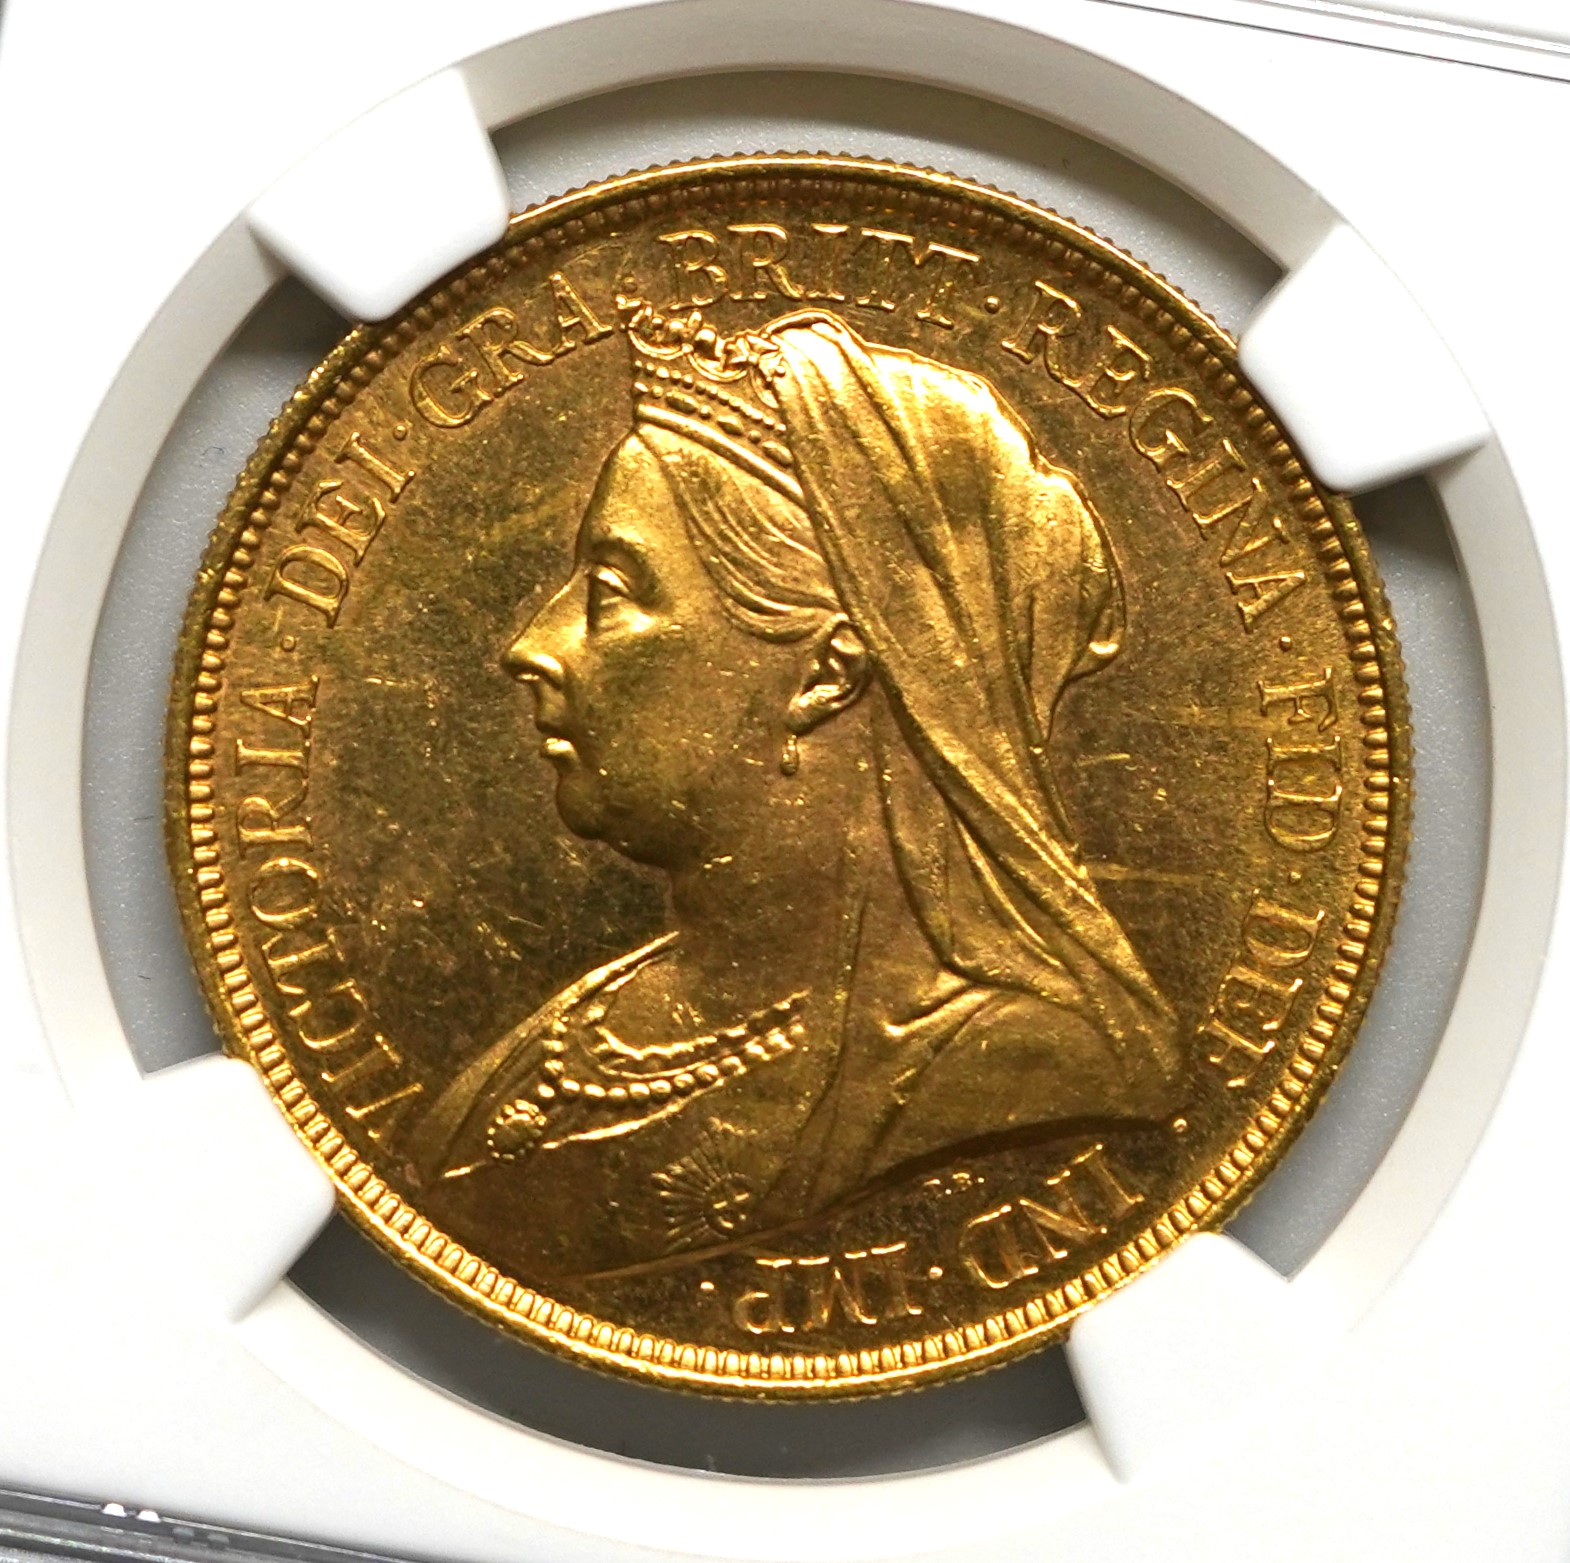 Sold】1893年 ヴィクトリア女王 ヴェールヘッド 5ポンド金貨 MS63 NGC 